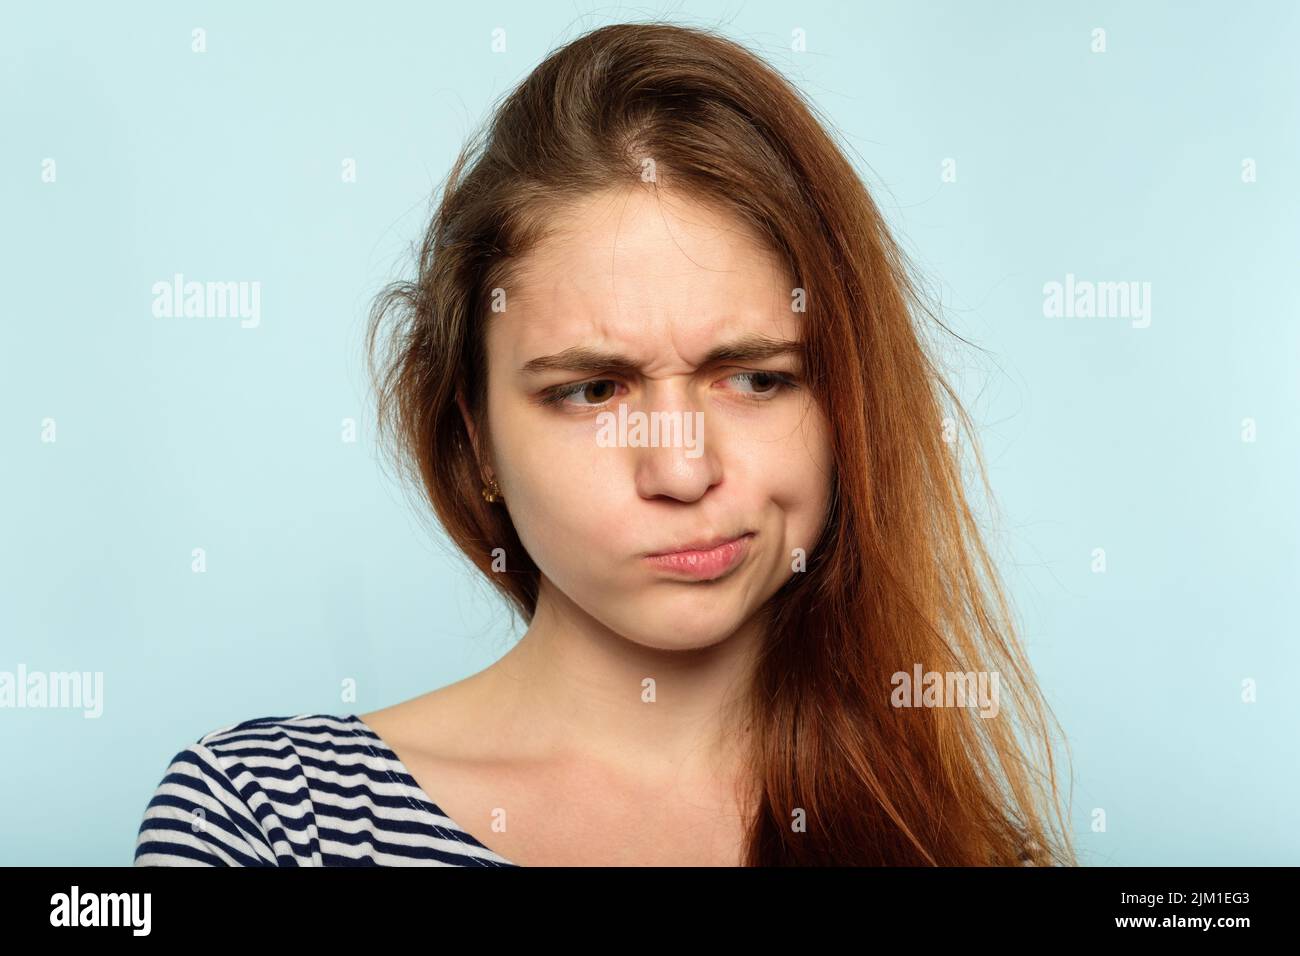 displeased capricious moody girl pursed lips Stock Photo